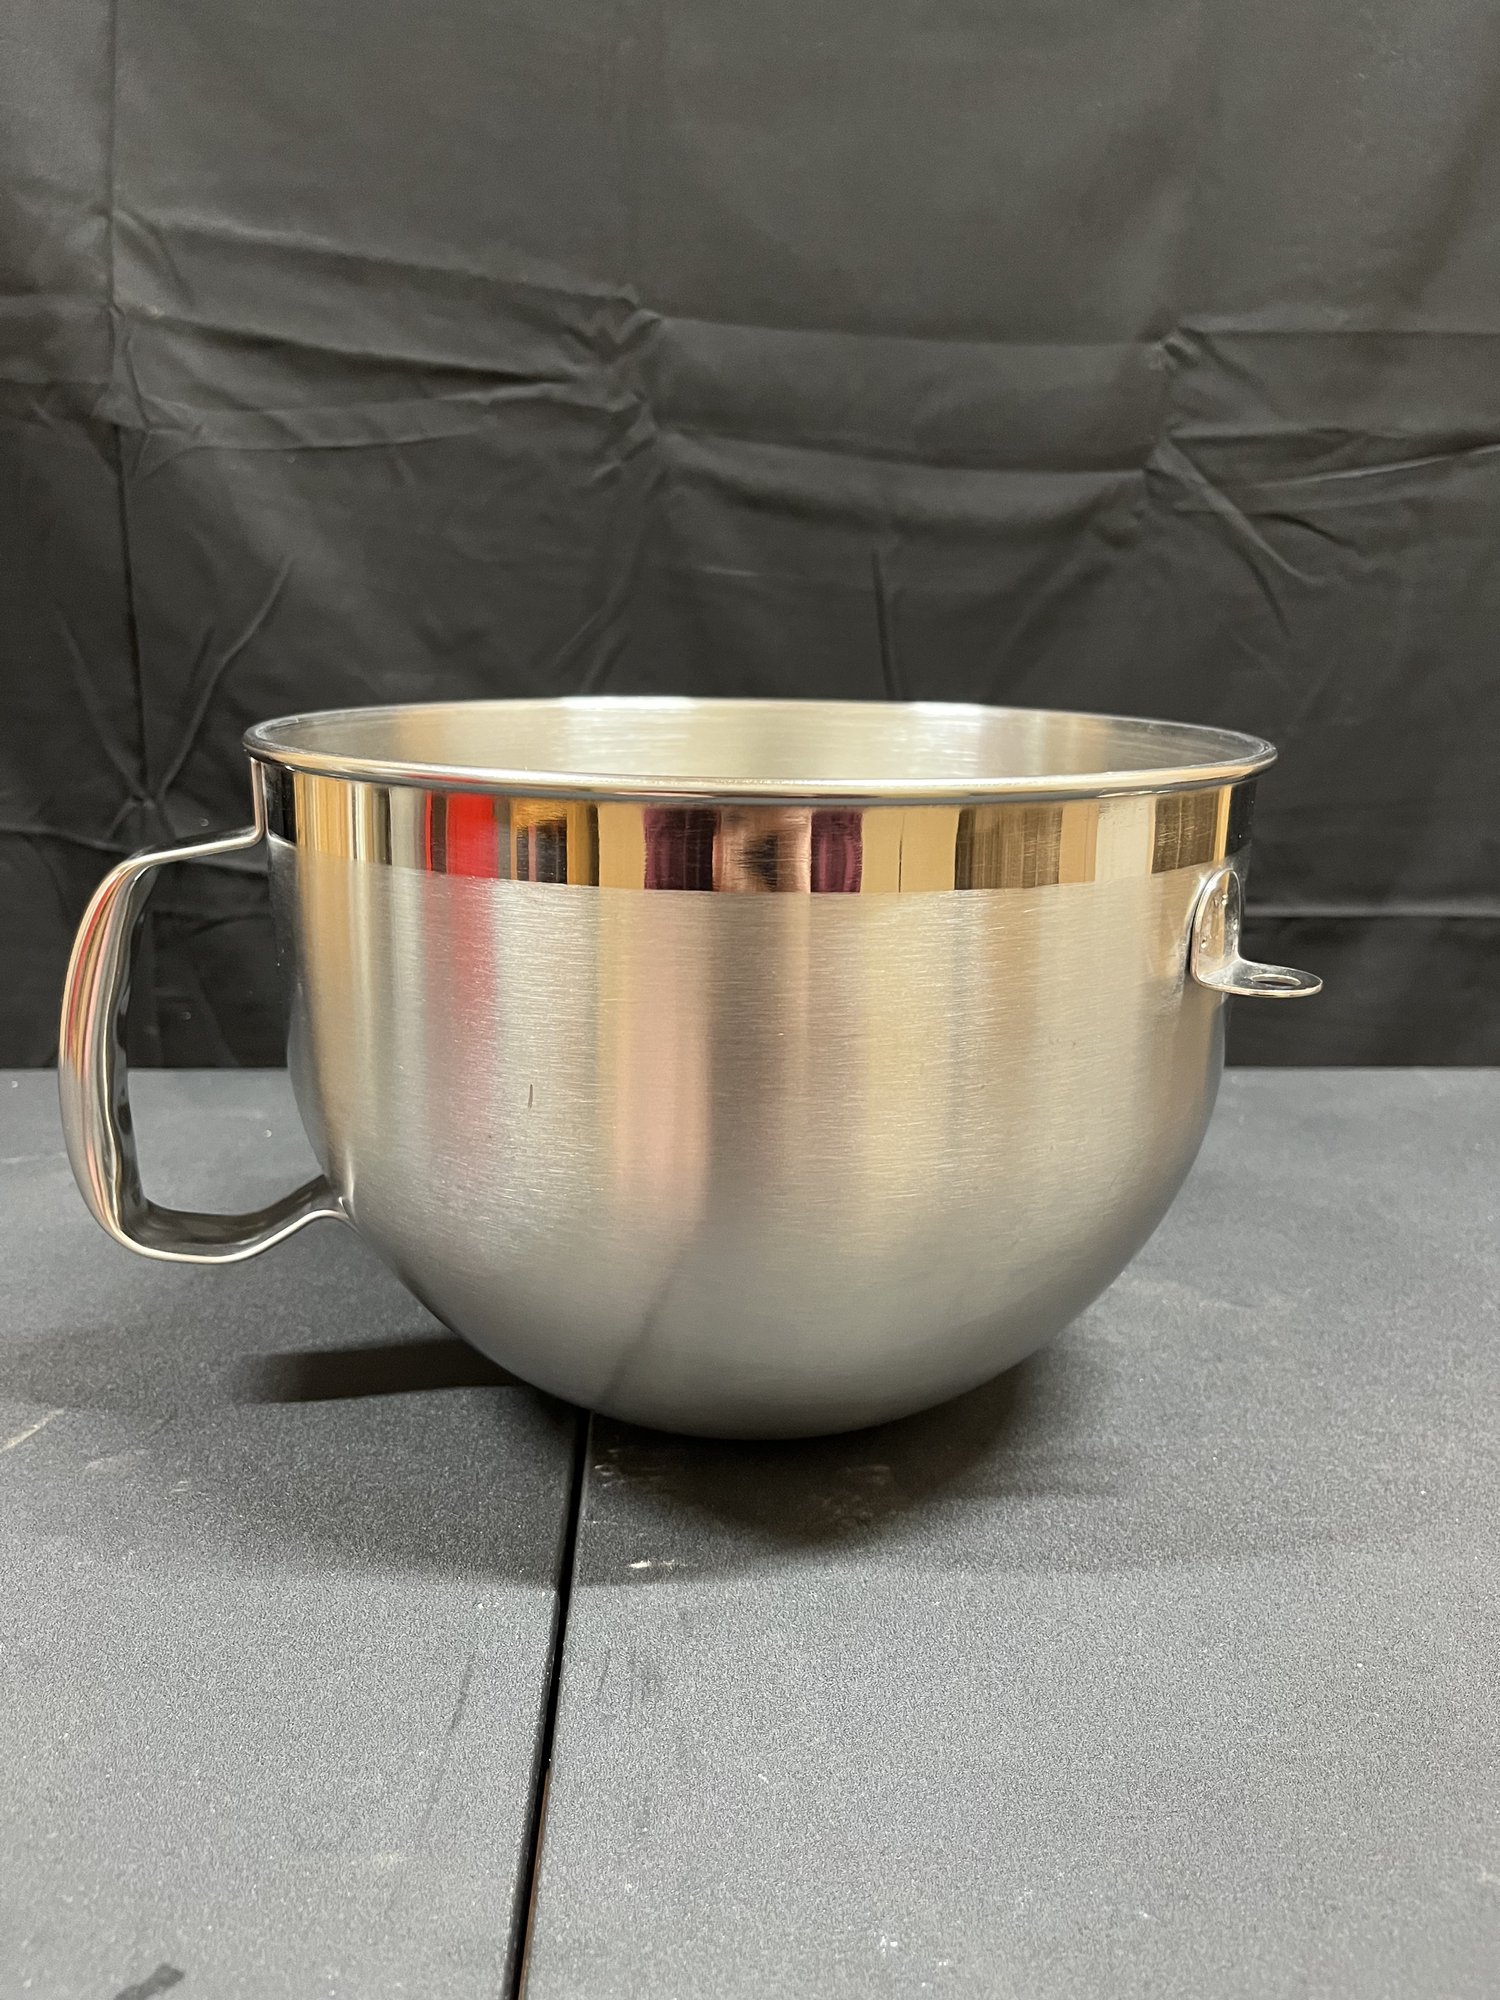  6 Quart Stainless Steel Bowl for Kitchenaid Picurean